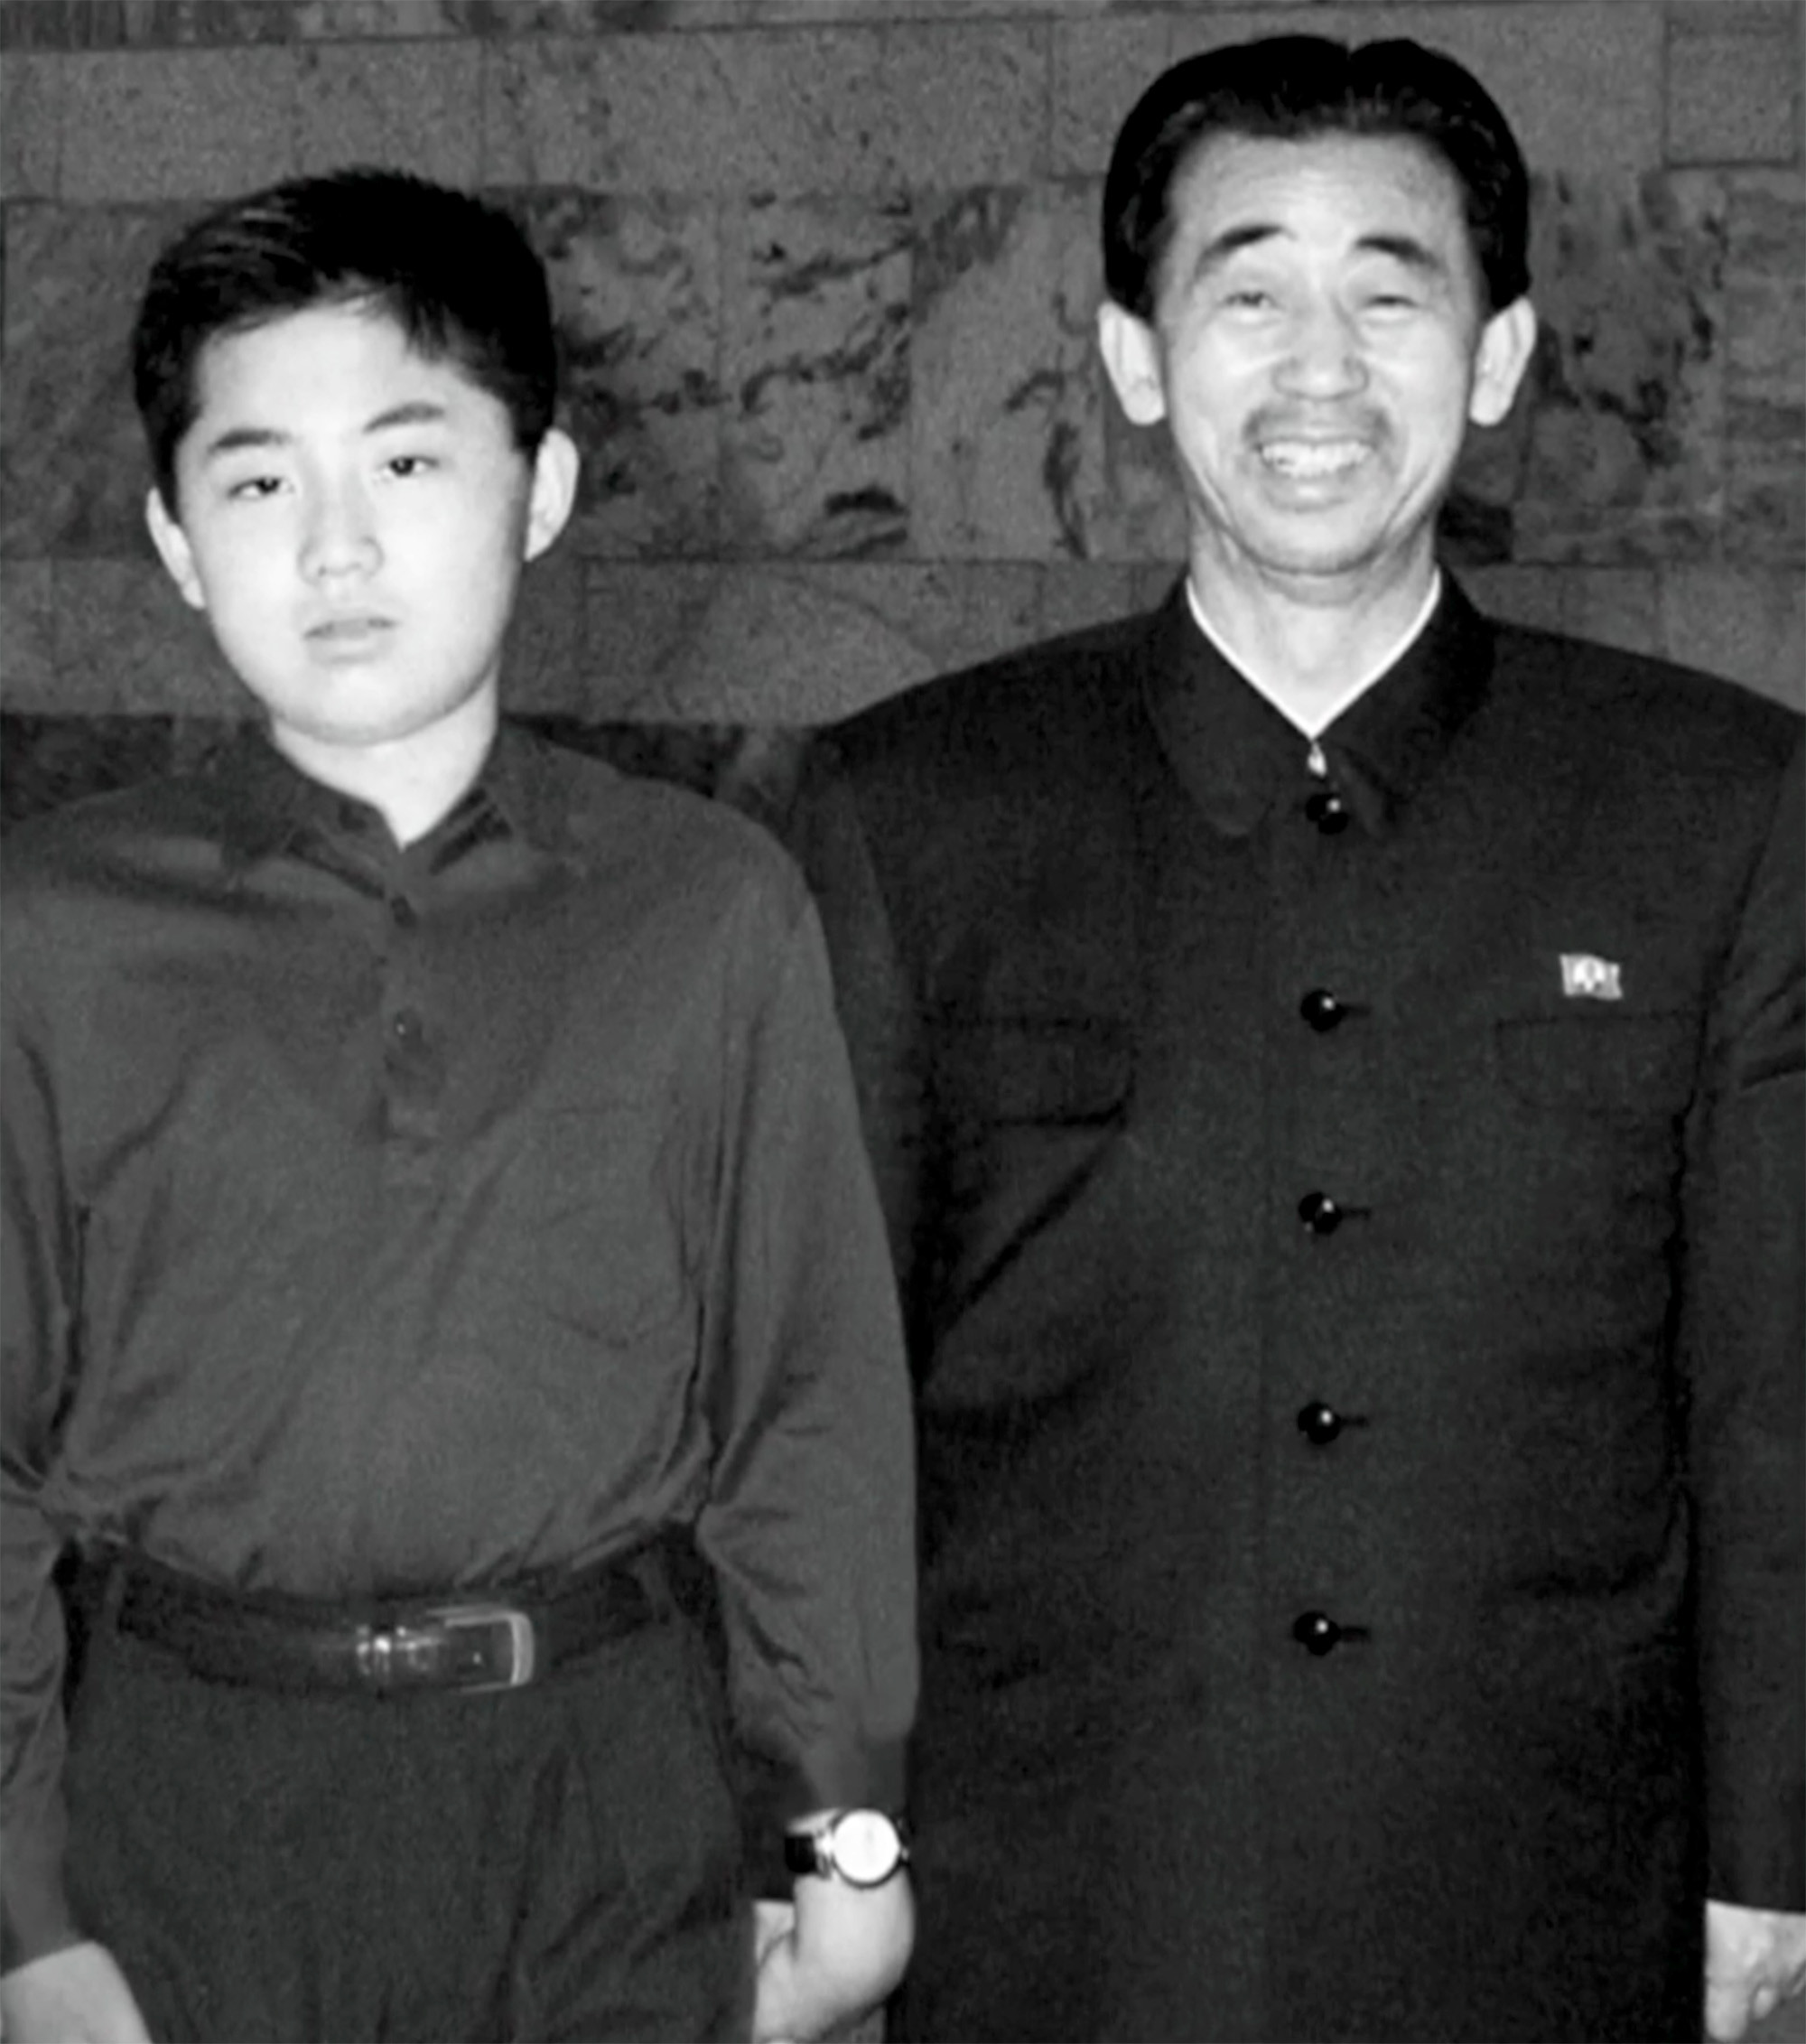 North Korea release unseen photos of dictator Kim Jong Un as a teenager